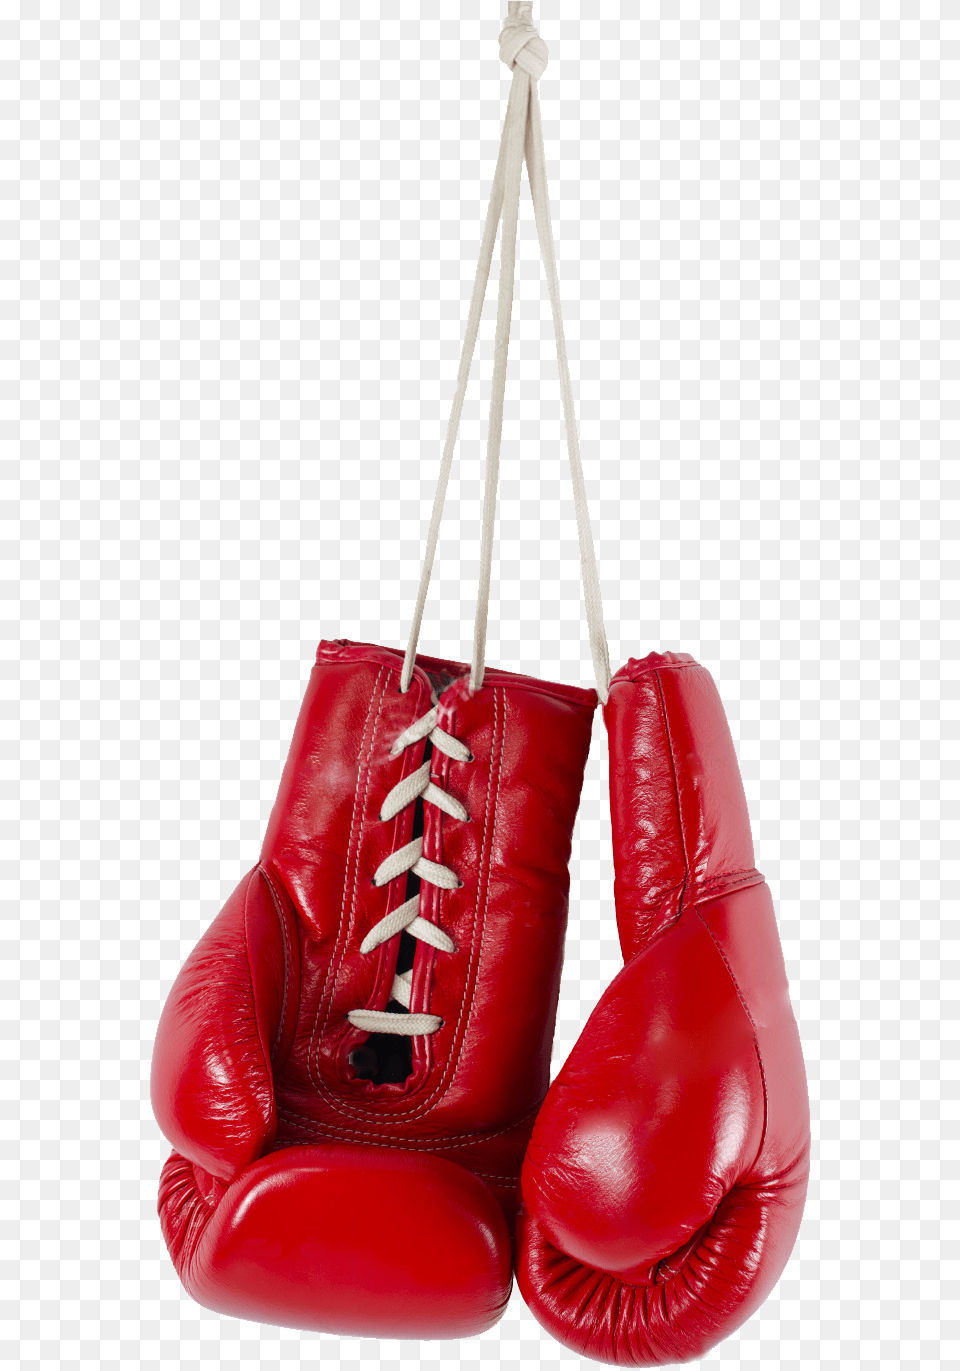 Boxing Gloves Download Glove, Clothing, Accessories, Bag, Handbag Free Transparent Png